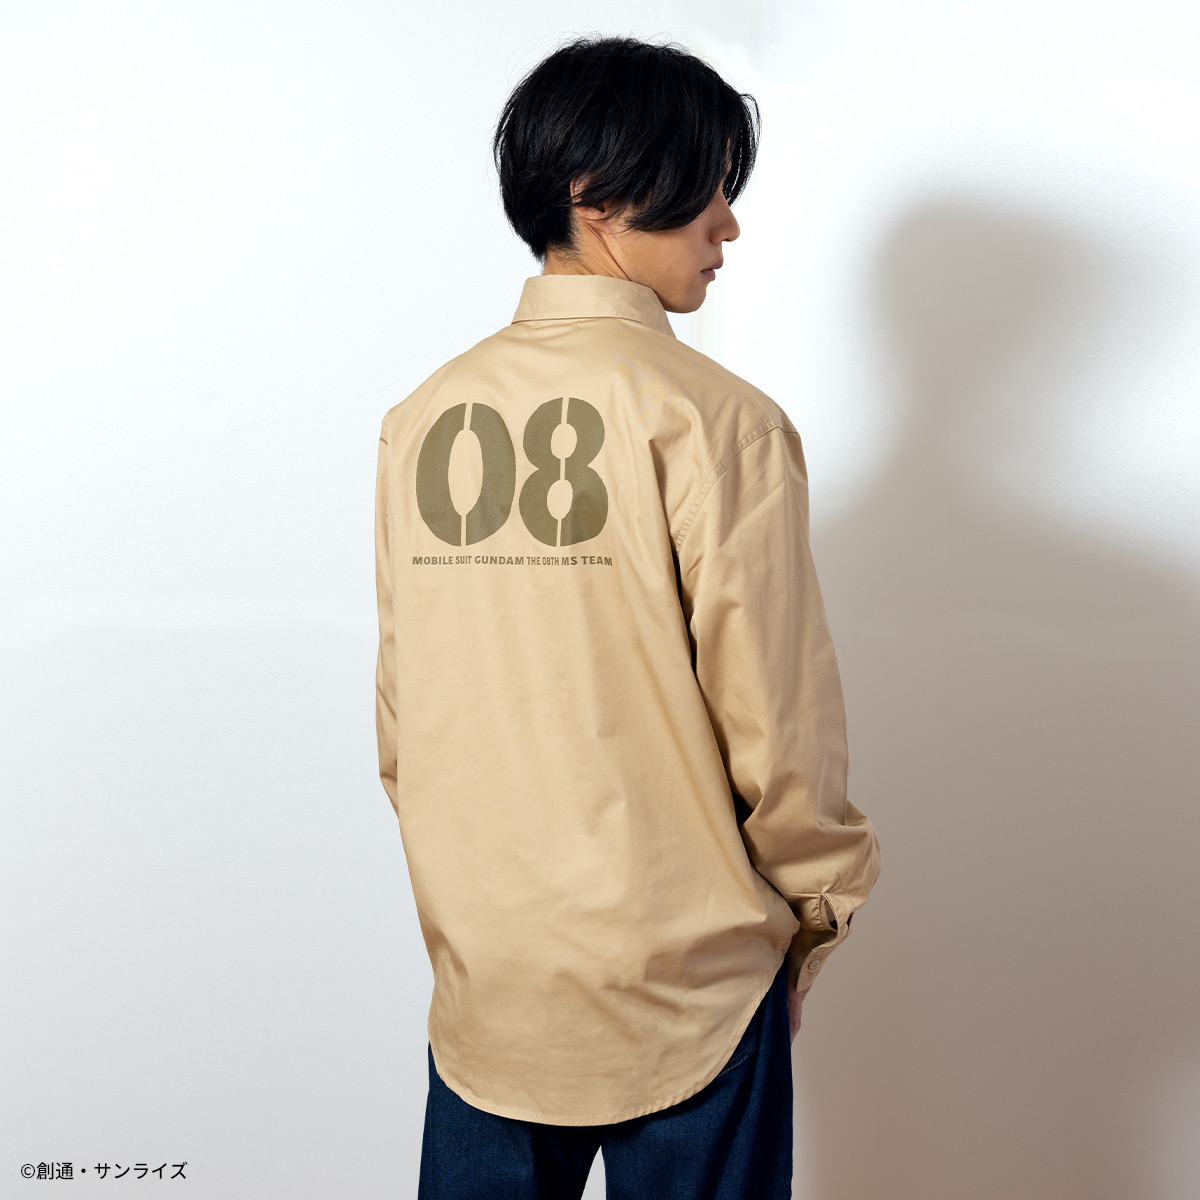 STRICT-G『機動戦士ガンダム 第08MS小隊』ワークシャツ